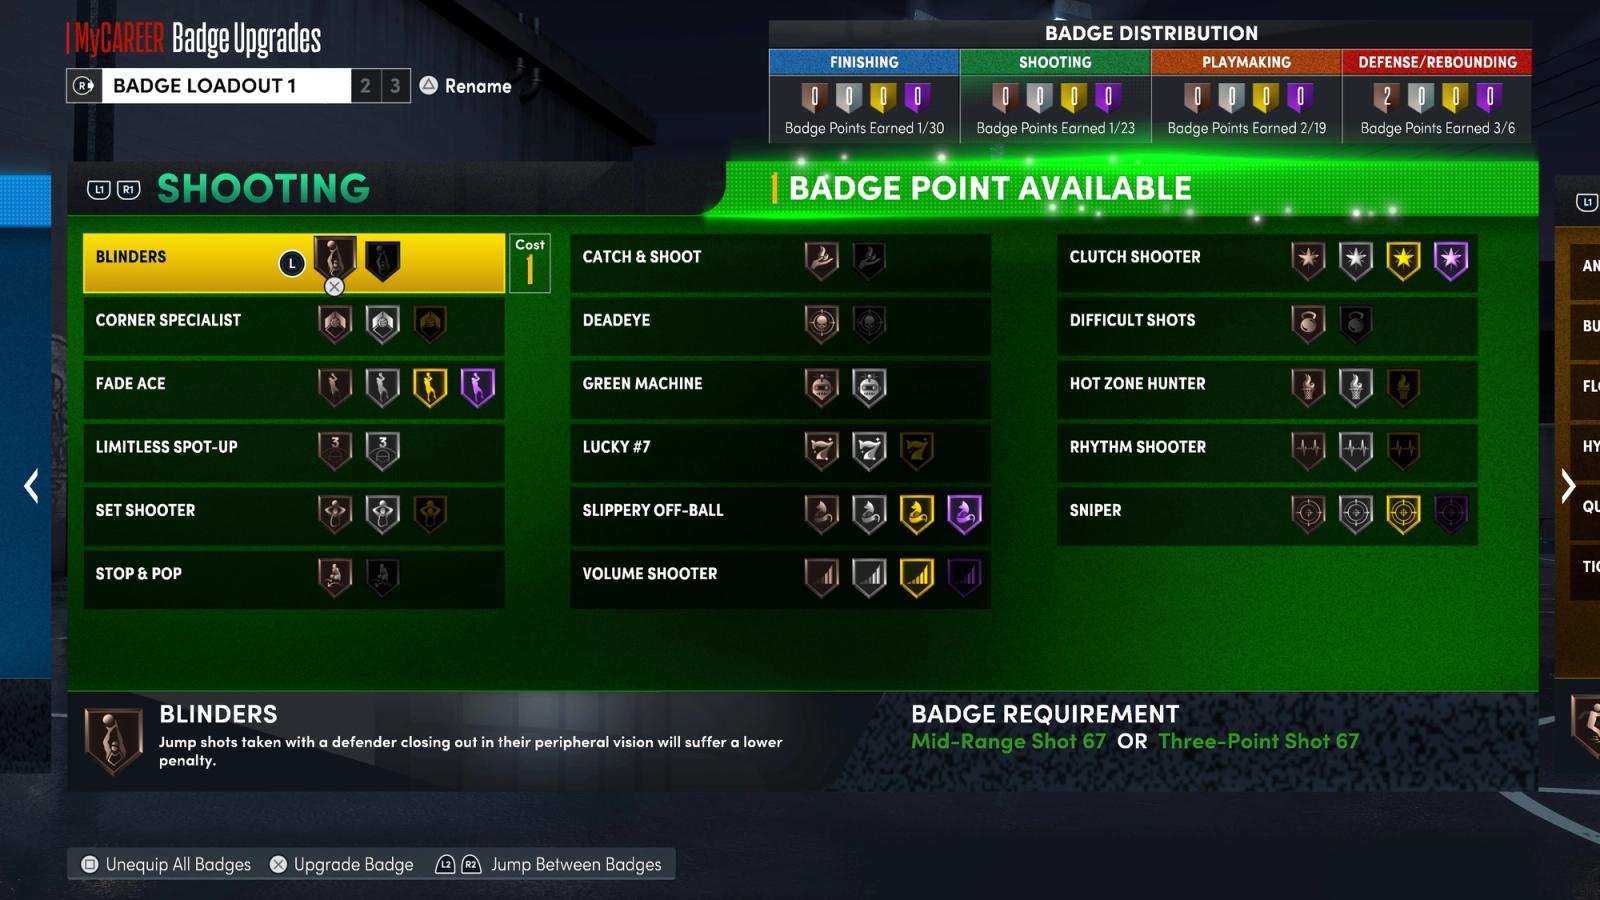 The Shooting Badges screen in NBA 2K22